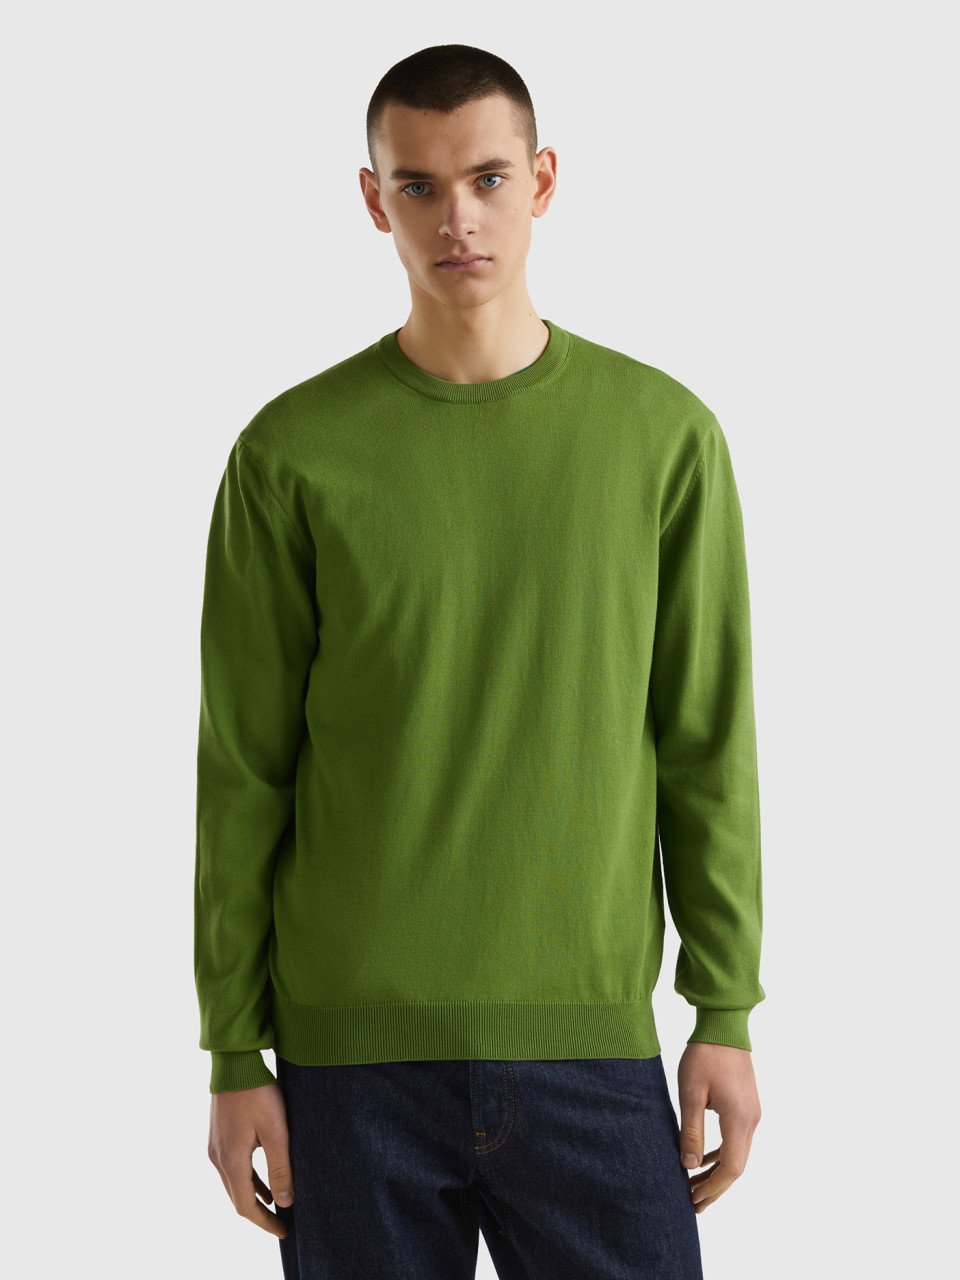 Benetton, Crew Neck Sweater In 100% Cotton, Military Green, Men